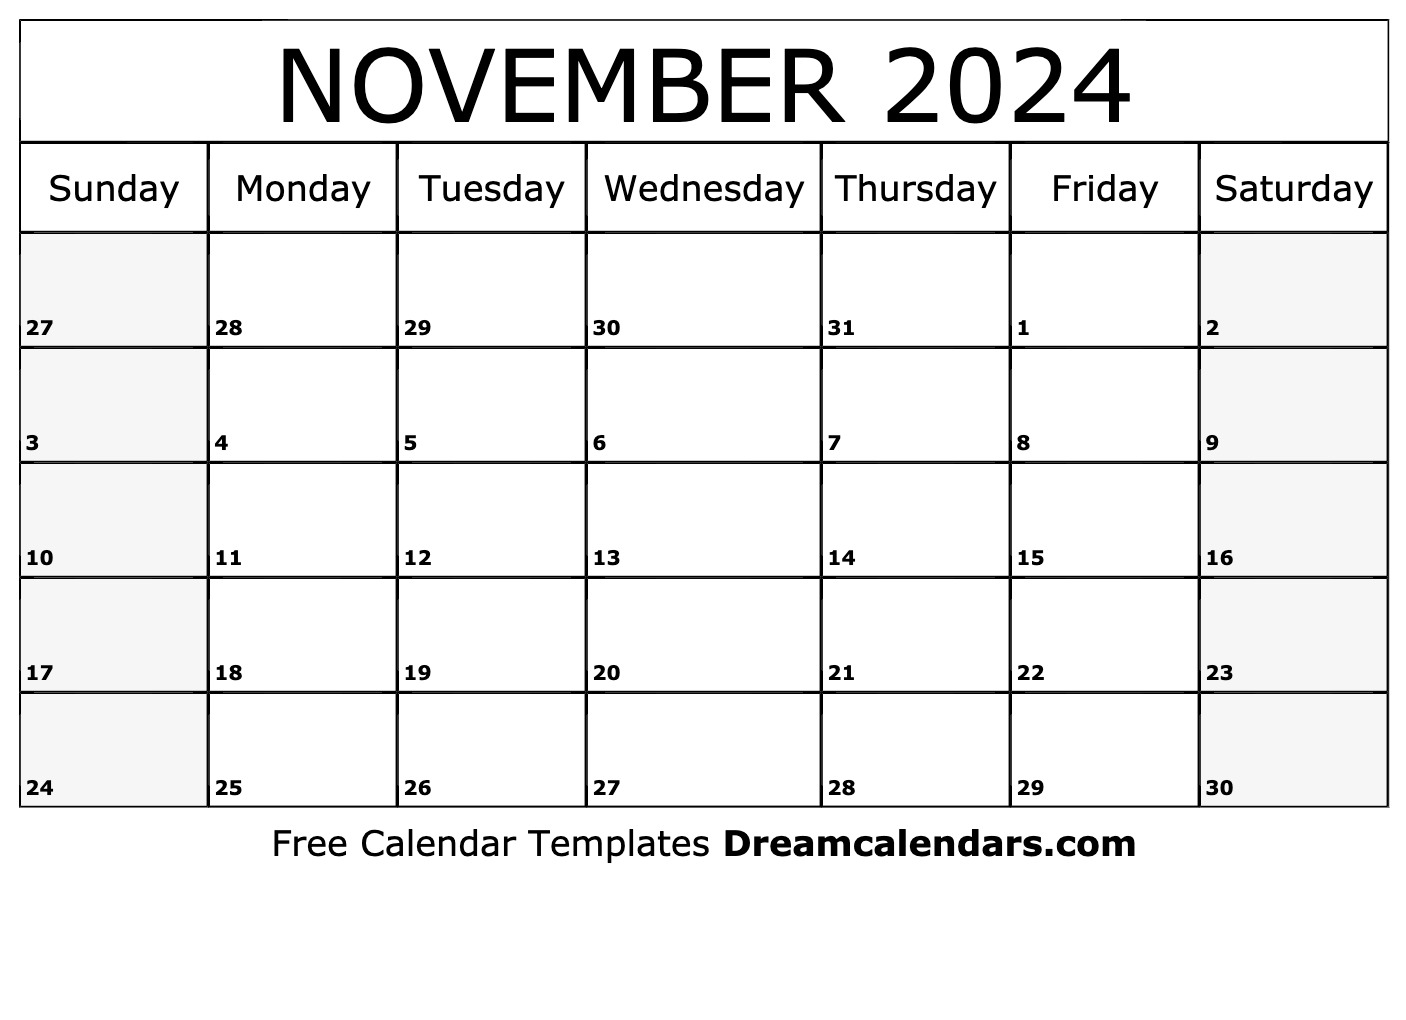 November Calendar Themes 2024 Cool Perfect Popular Famous Moon